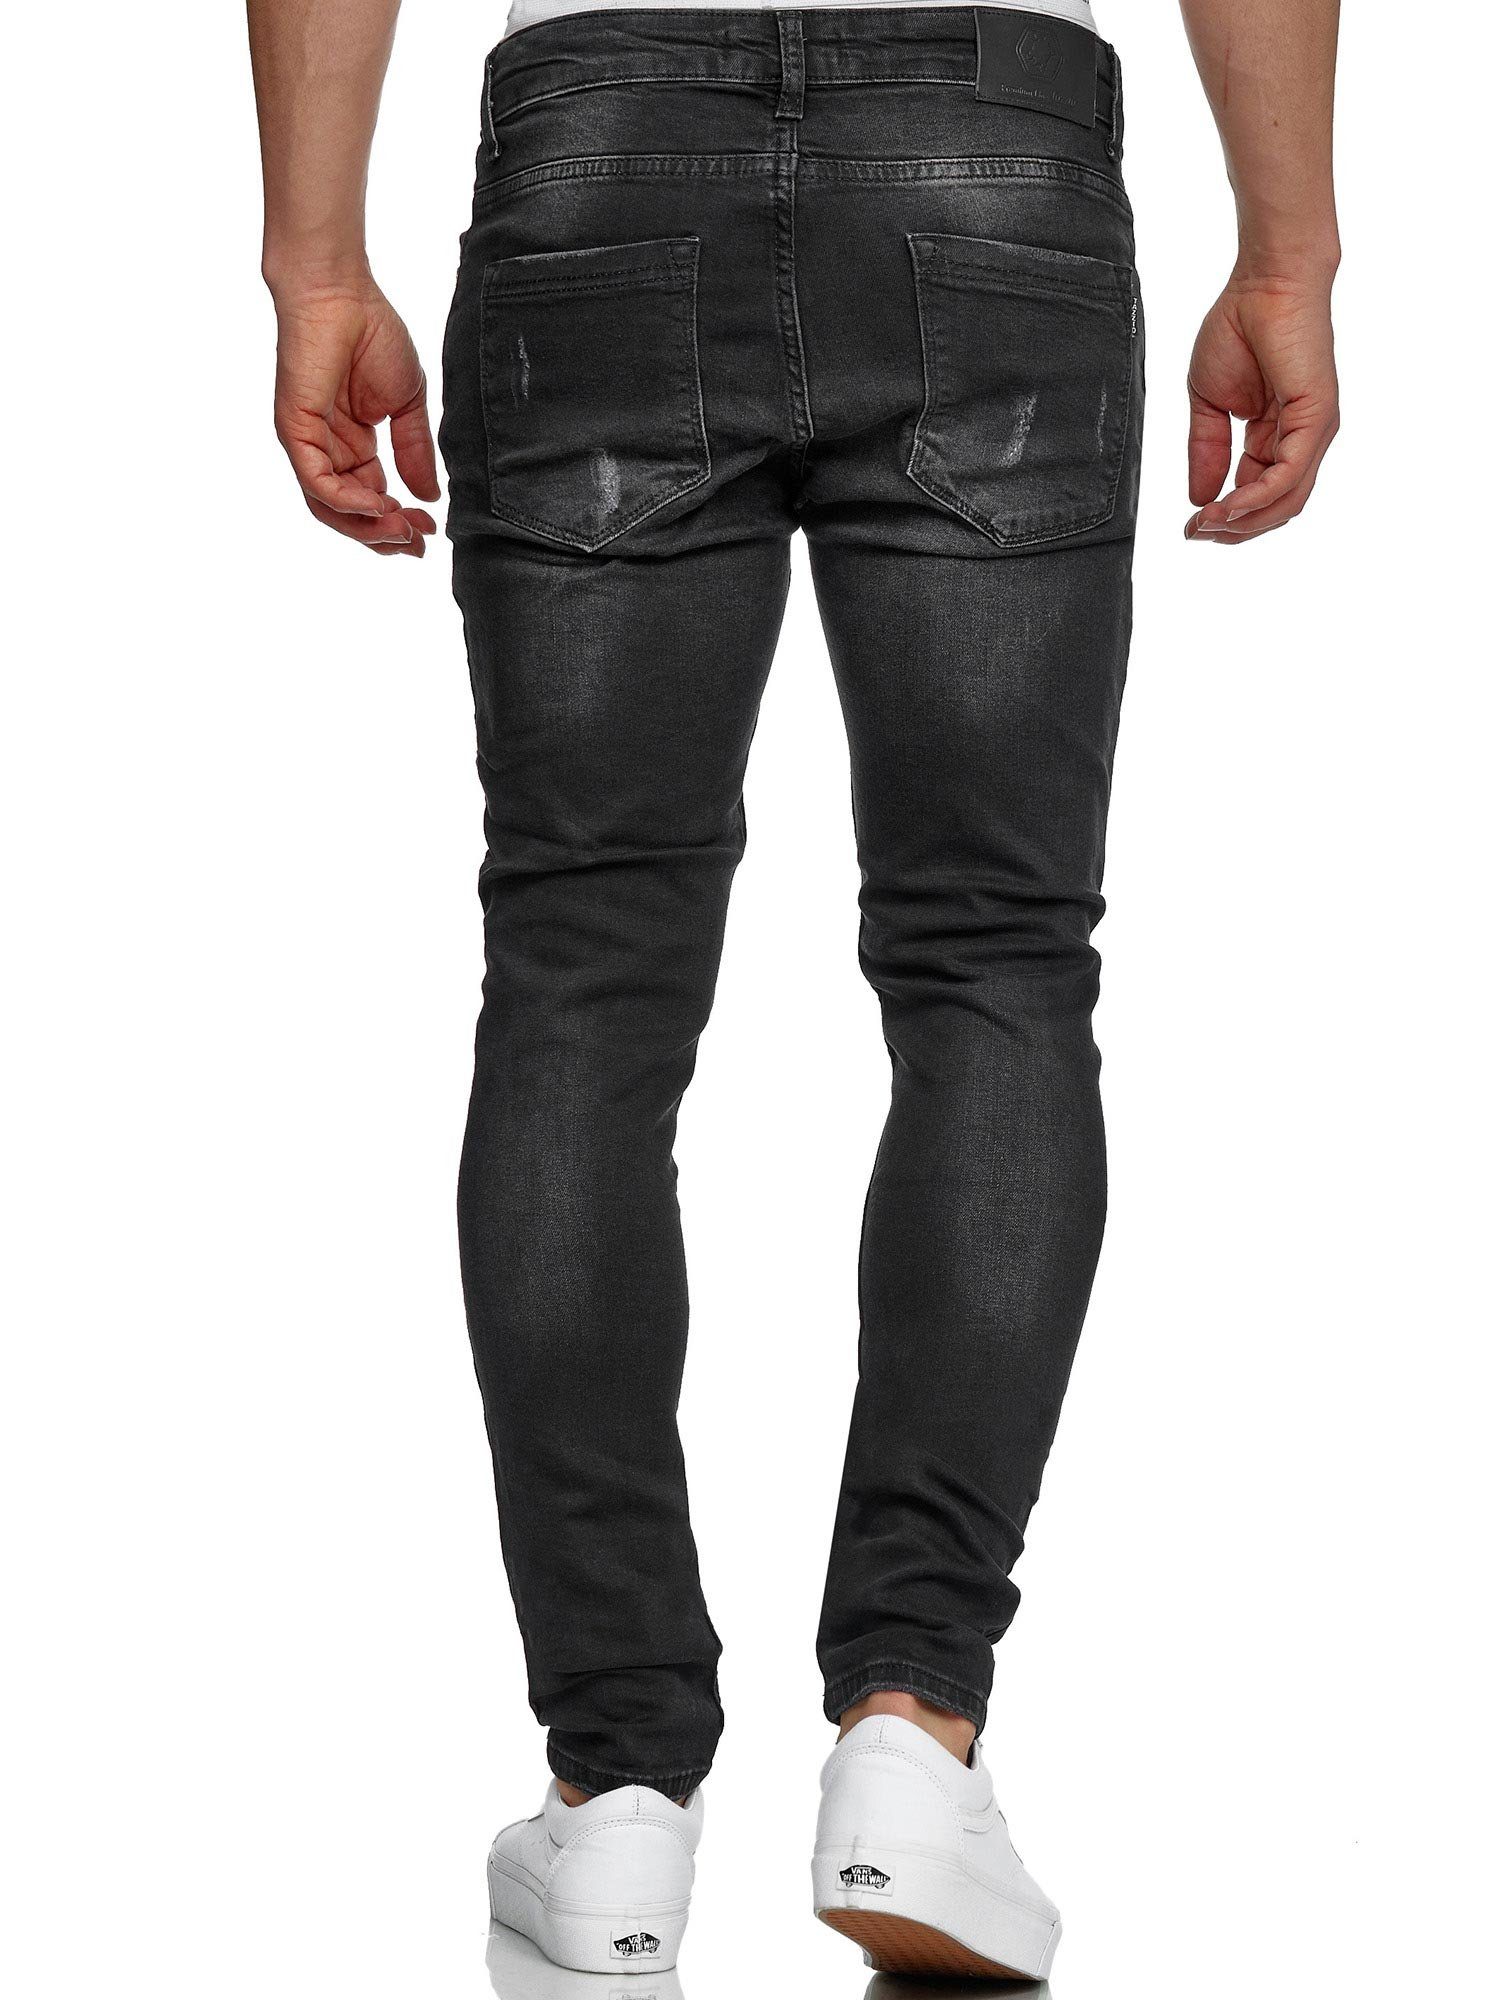 Tazzio Destroyed-Look schwarz 17514 im Skinny-fit-Jeans